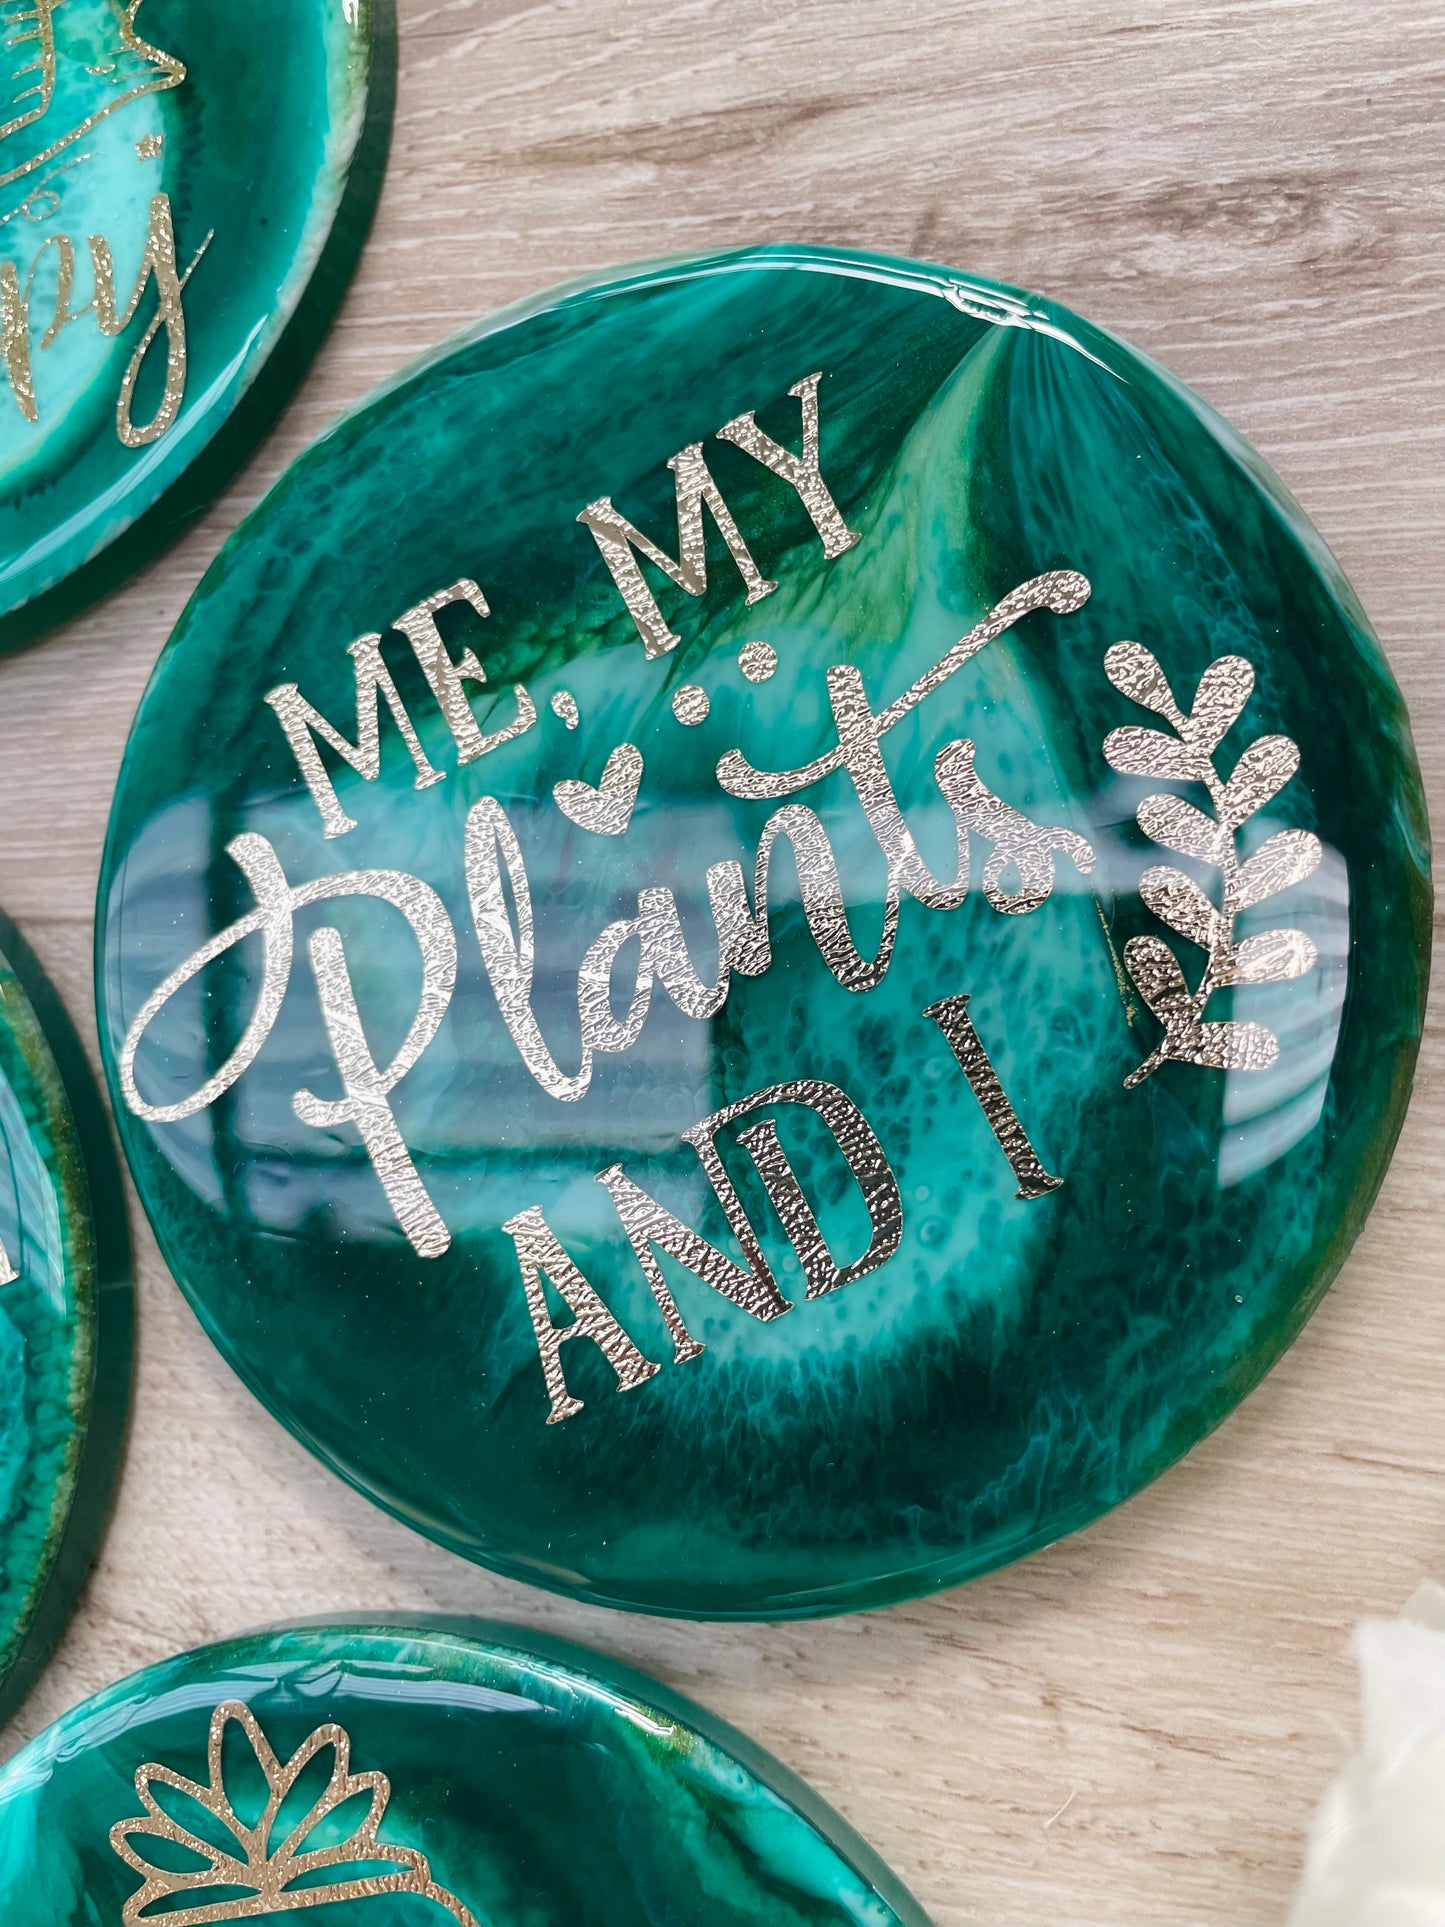 Plant Lover Coaster Set